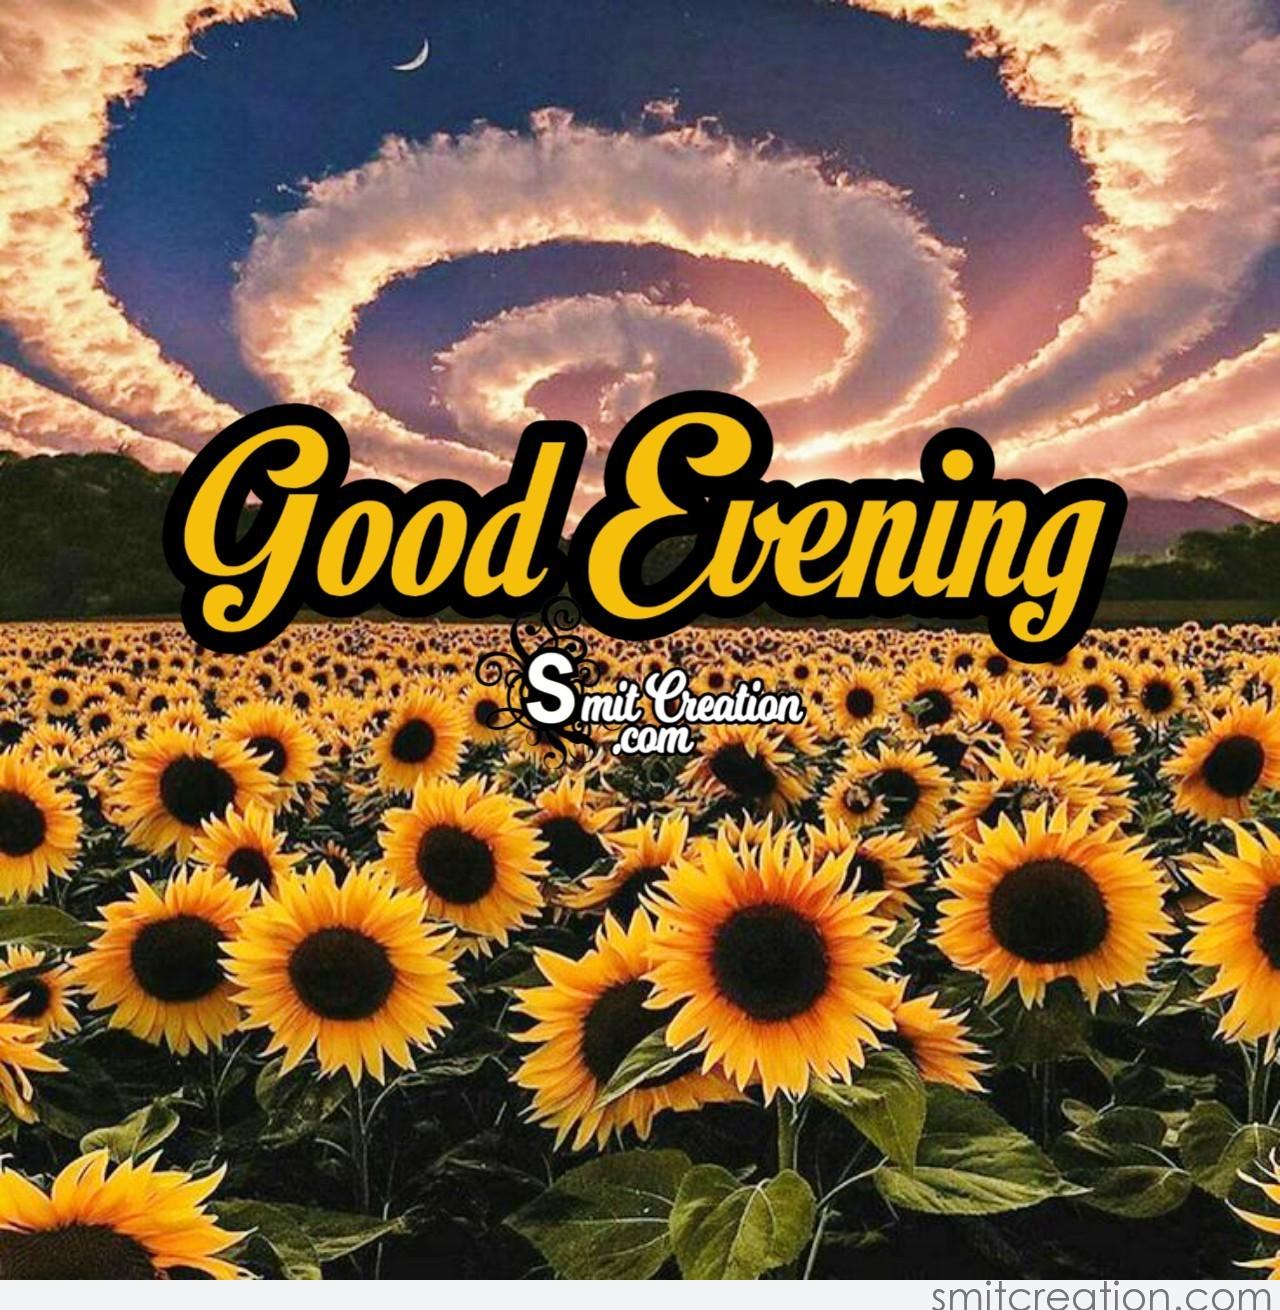 Good Evening Sunflower Pic - SmitCreation.com